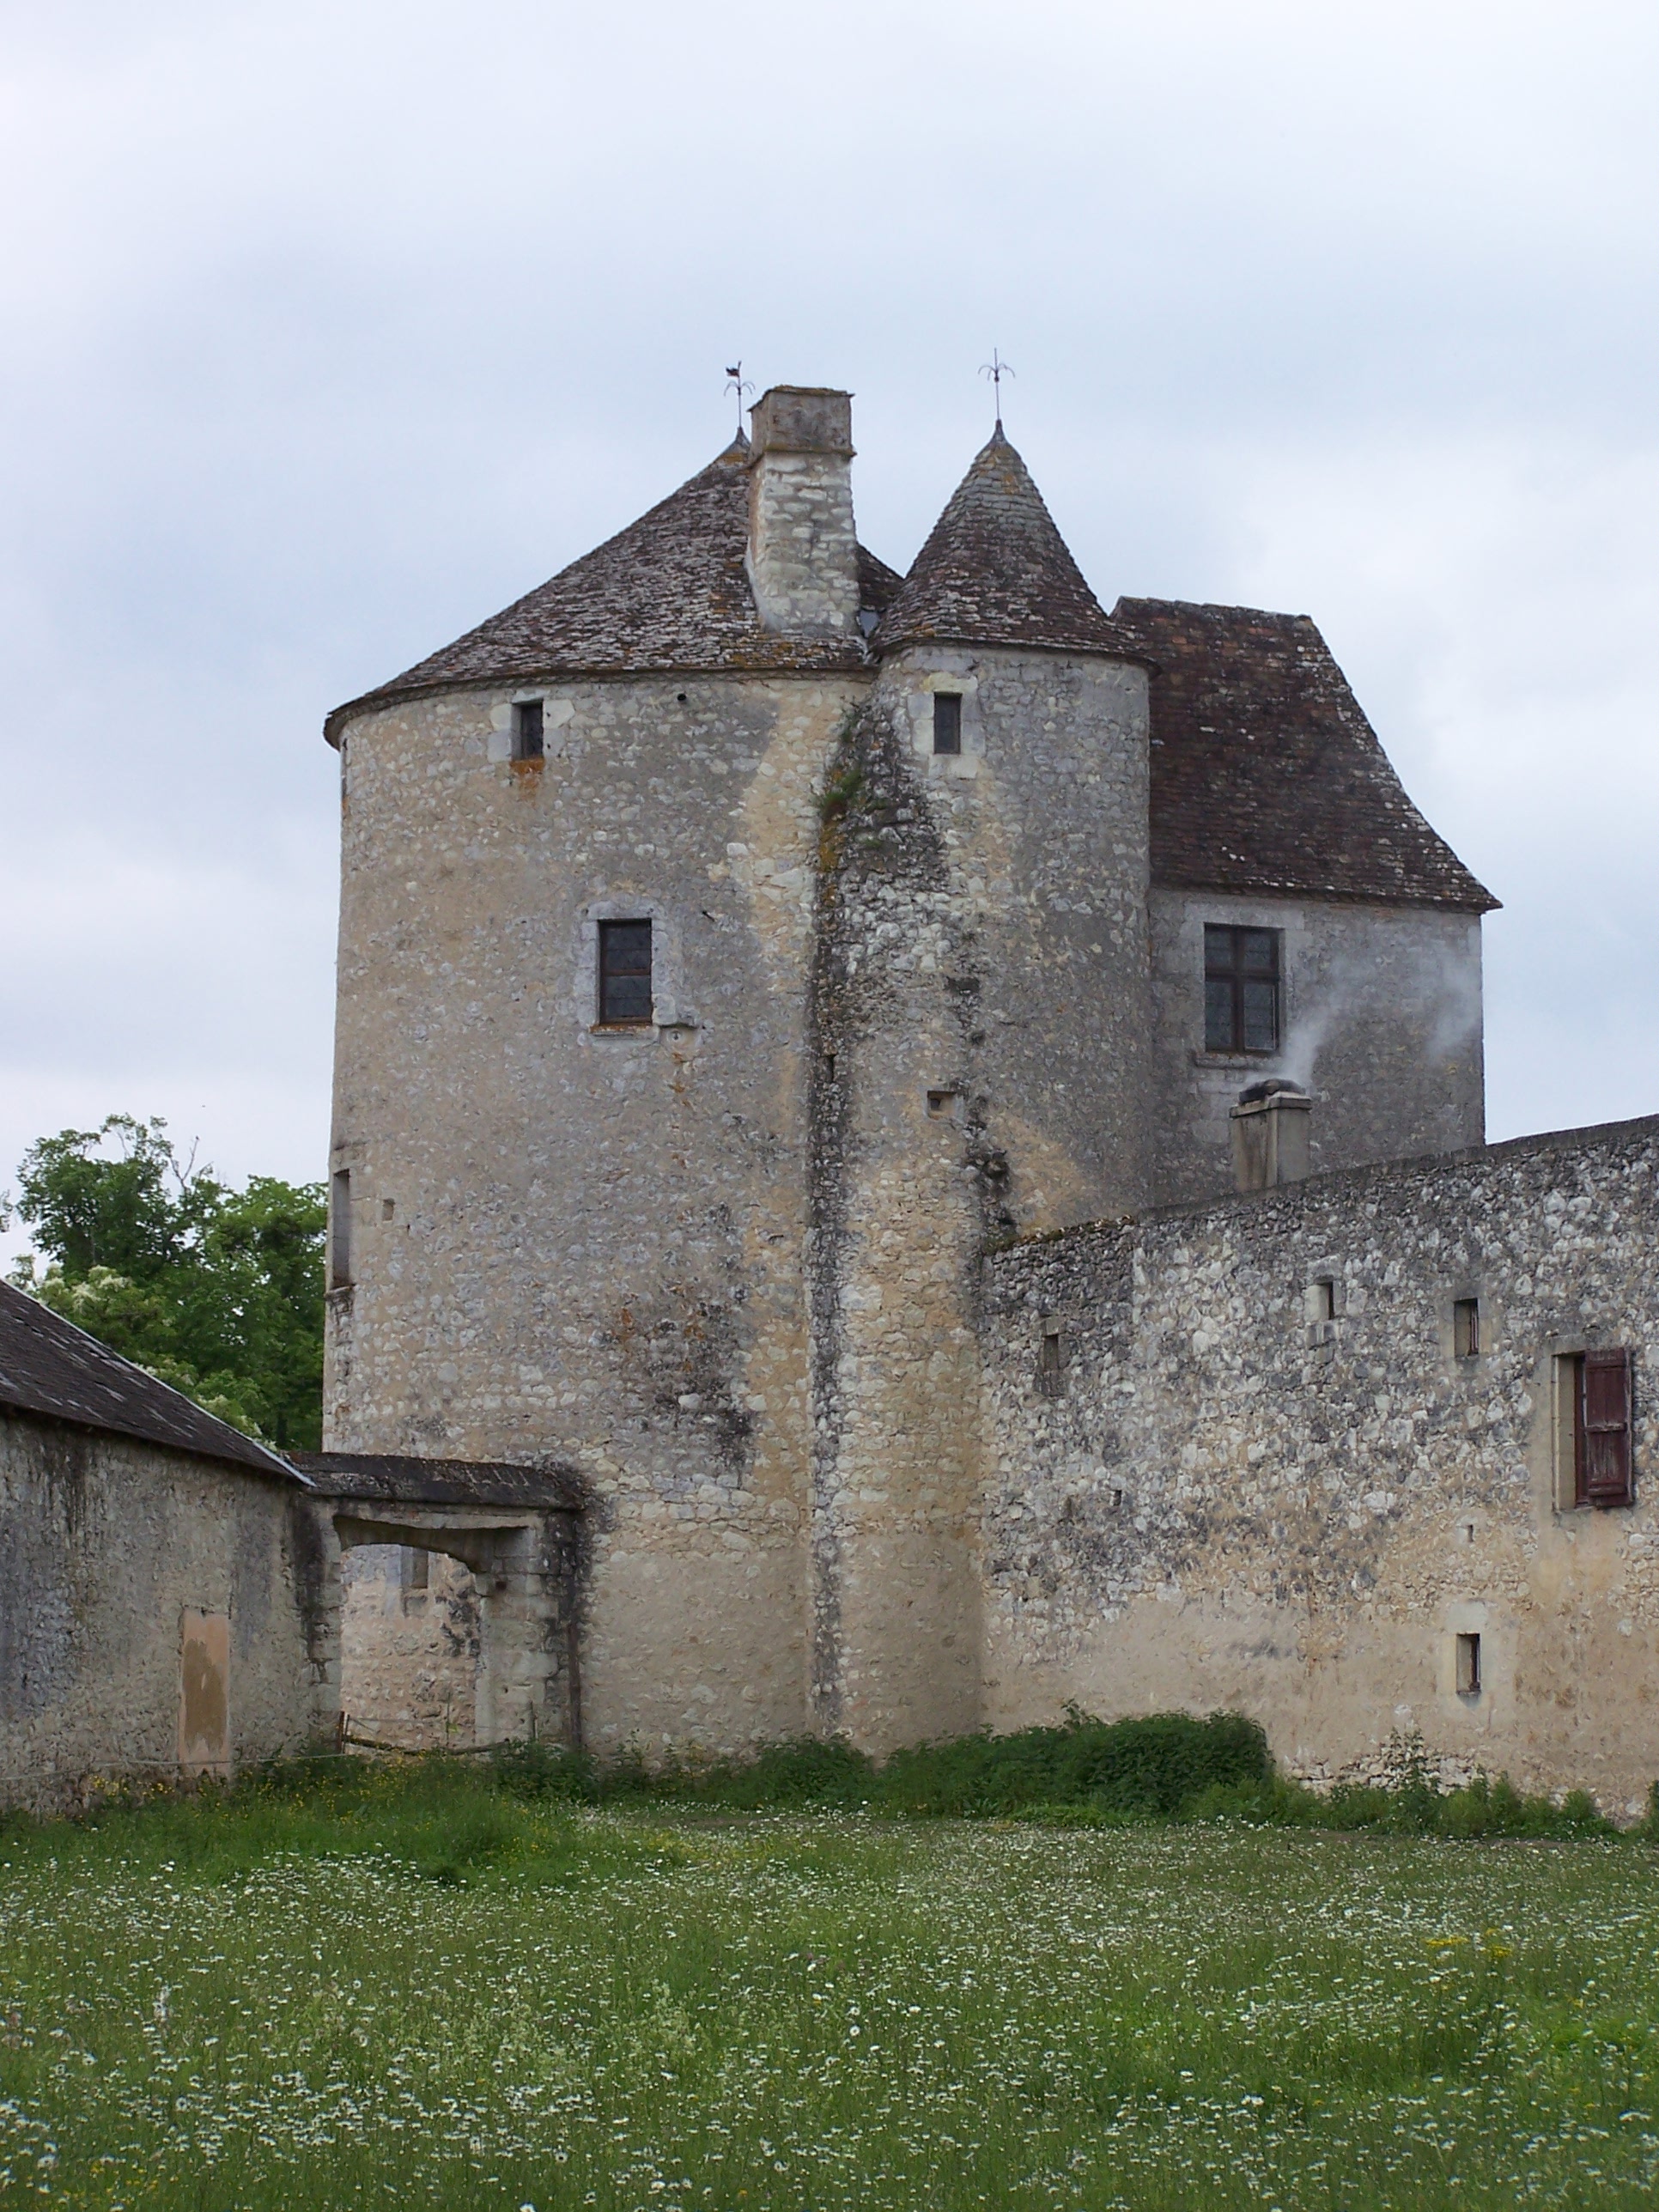 The tower of Michel de Montaigne